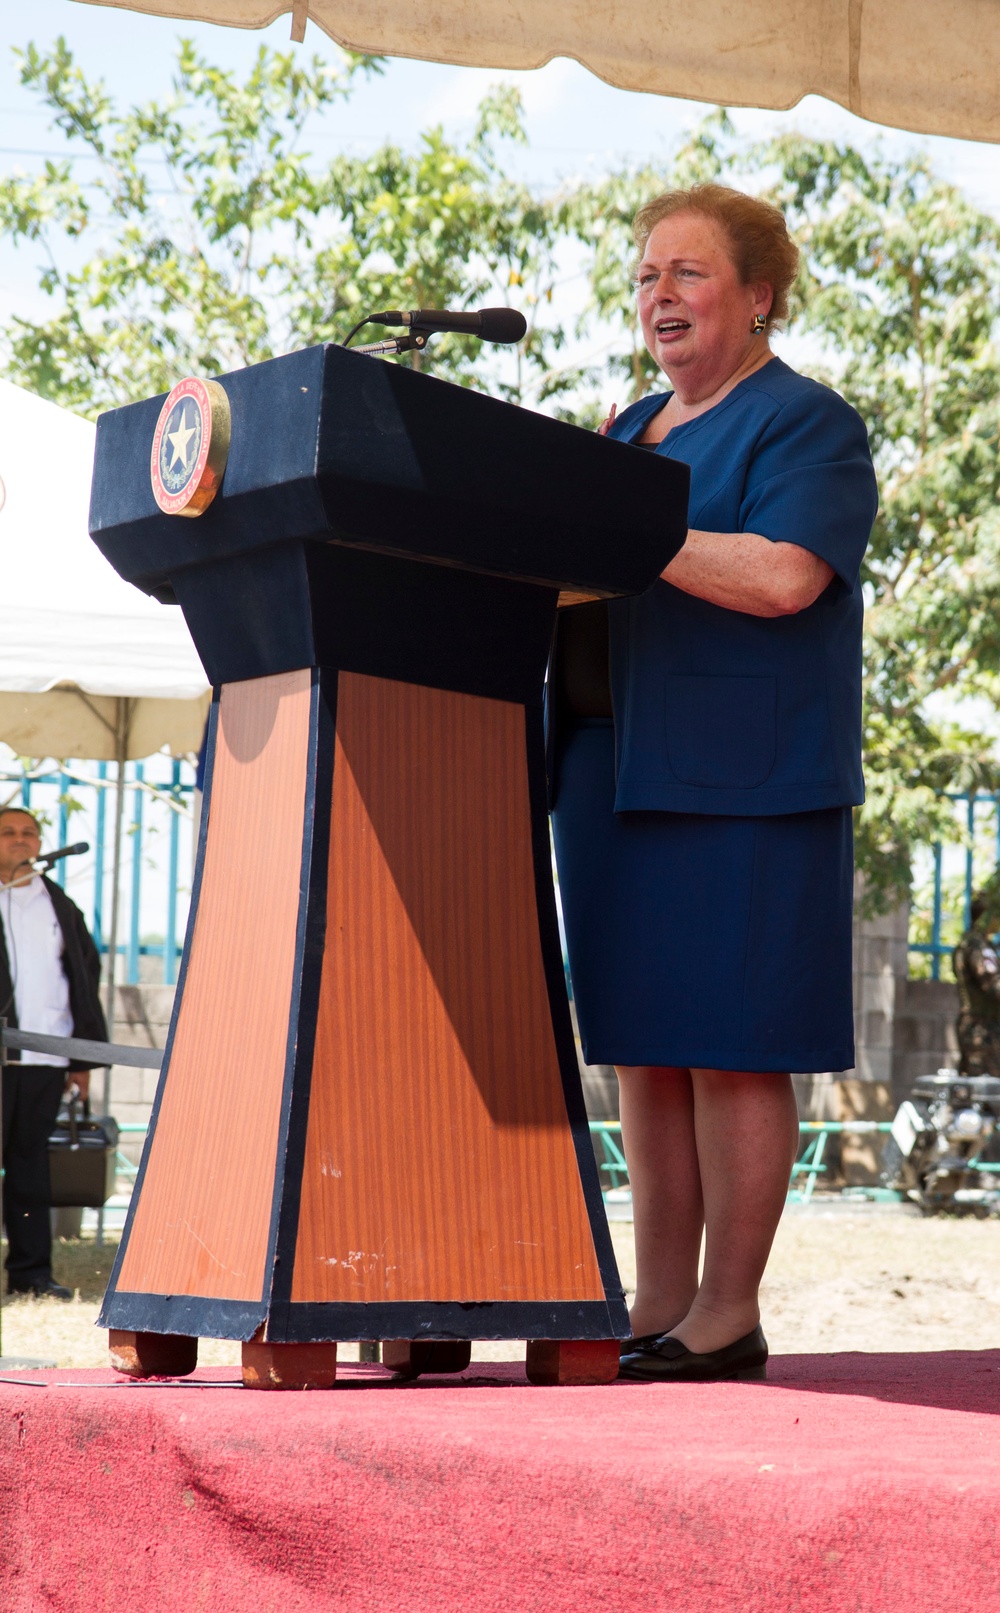 US ambassador to El Salvador introduces BTH15